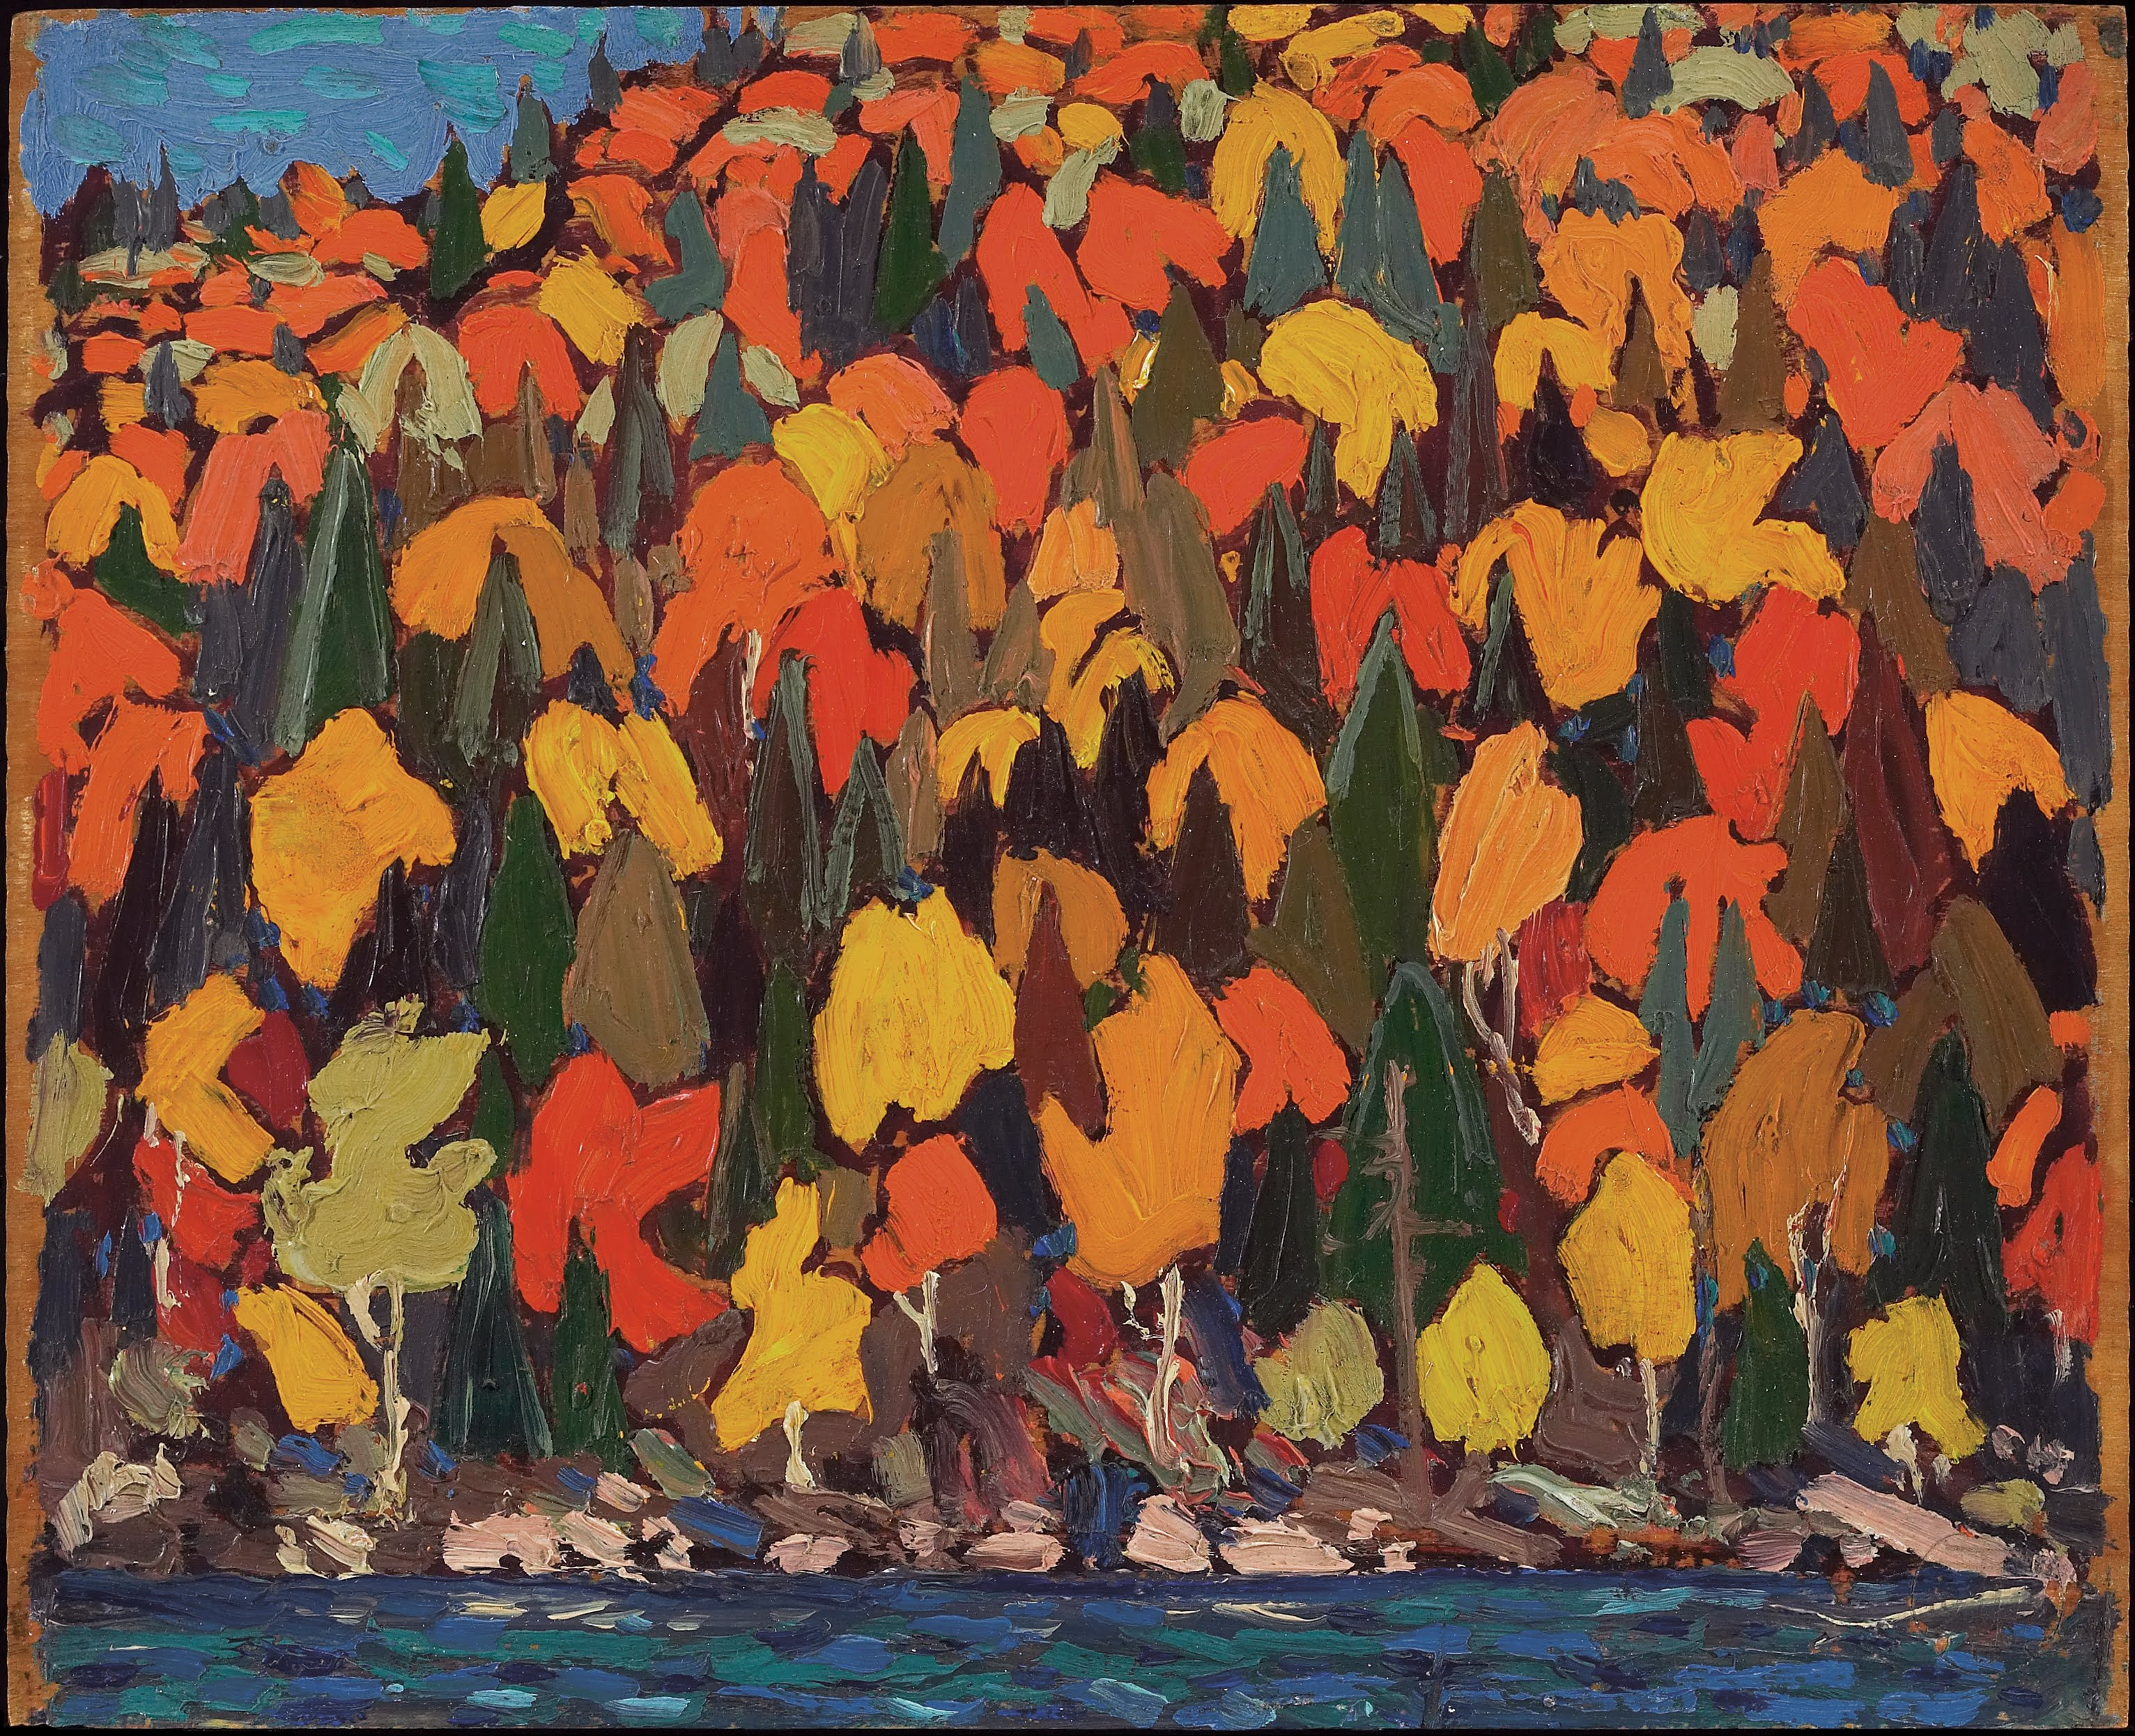 Herfstbladeren by Tom Thomson - 1915 - 21,6 x 26,8 cm 